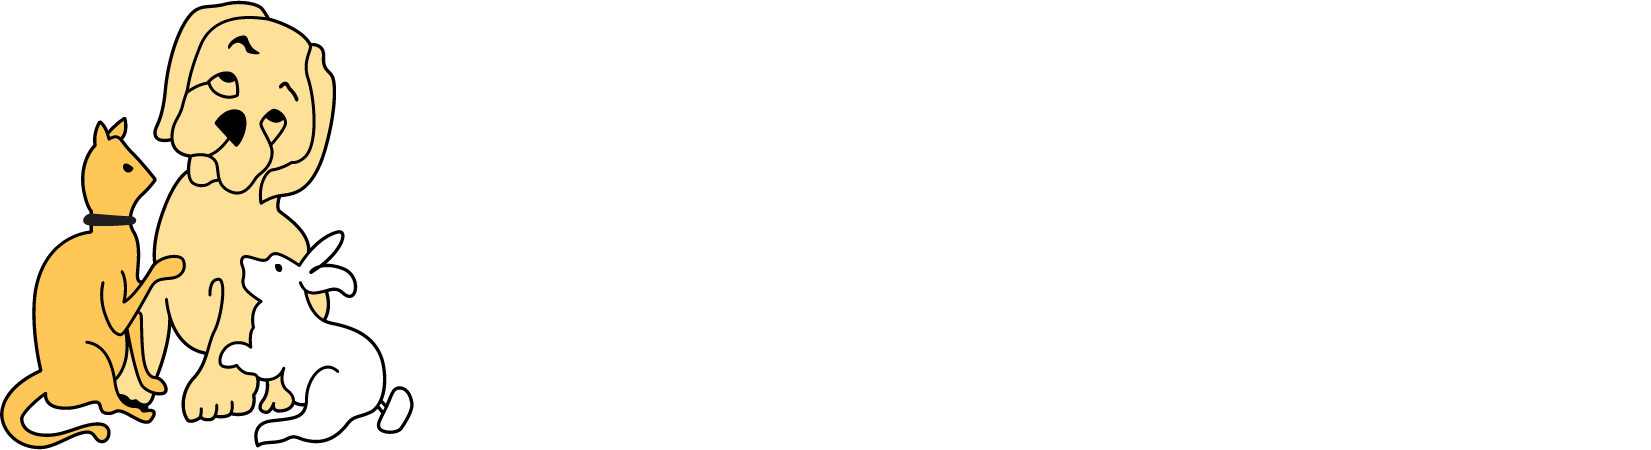 Hopewell Animal Hospital